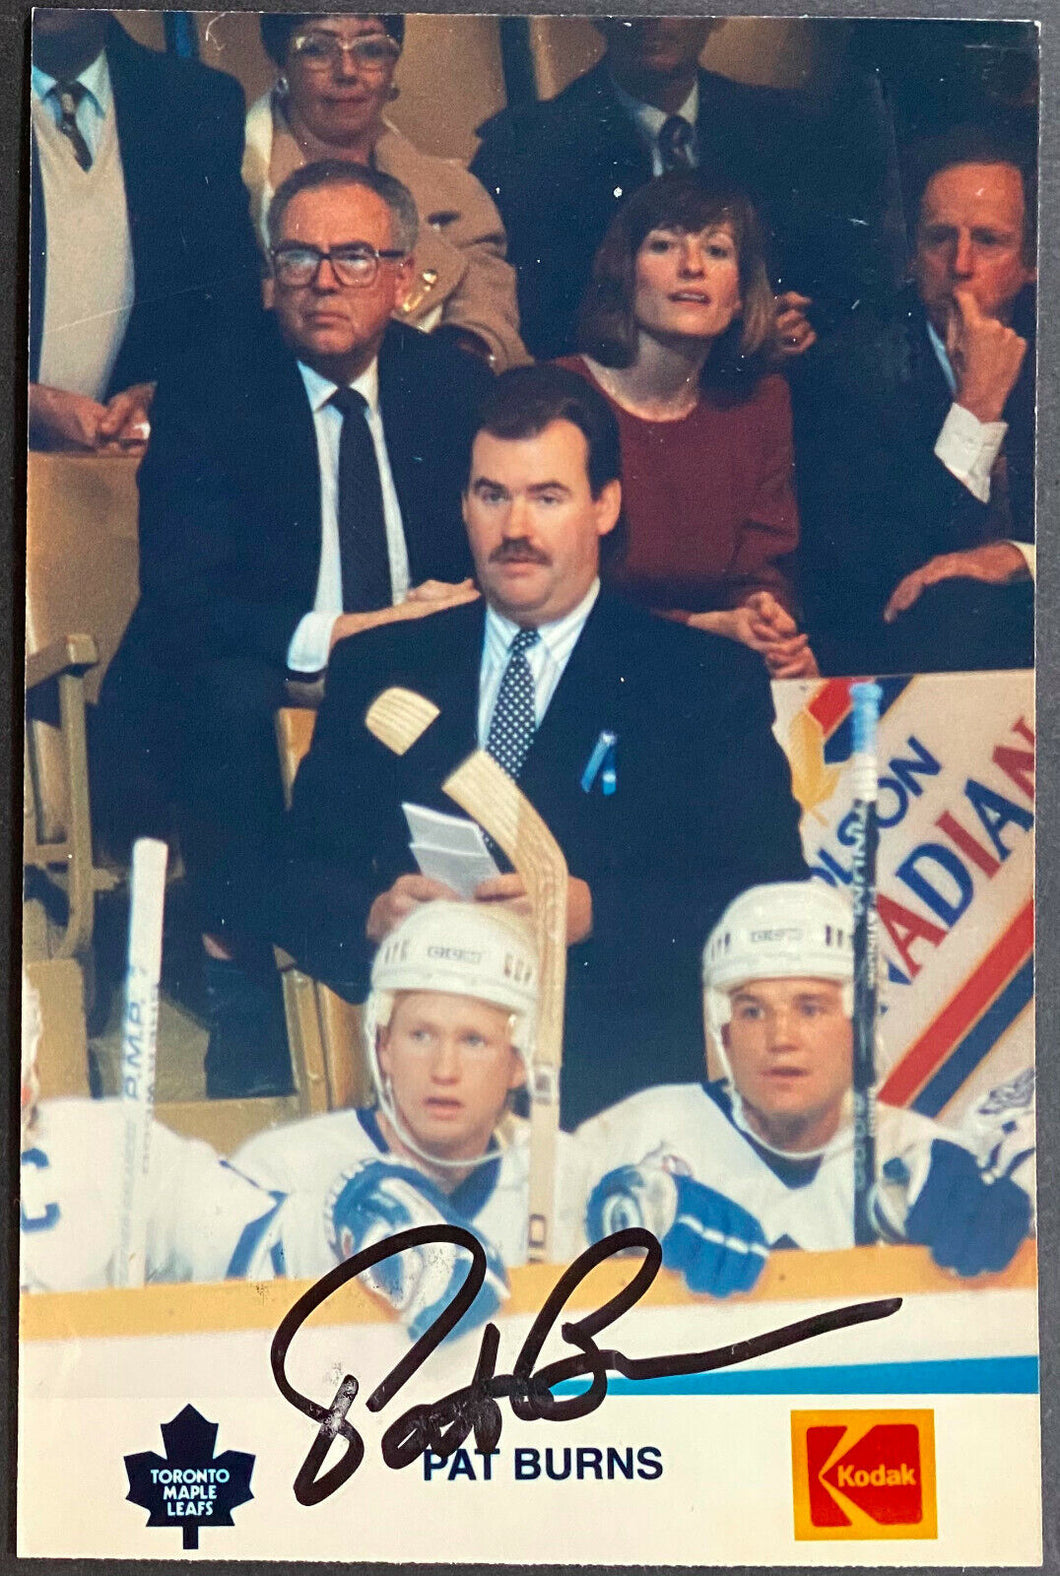 Pat Burns Autographed Signed Toronto Maple Leafs Photo NHL Hockey Coach